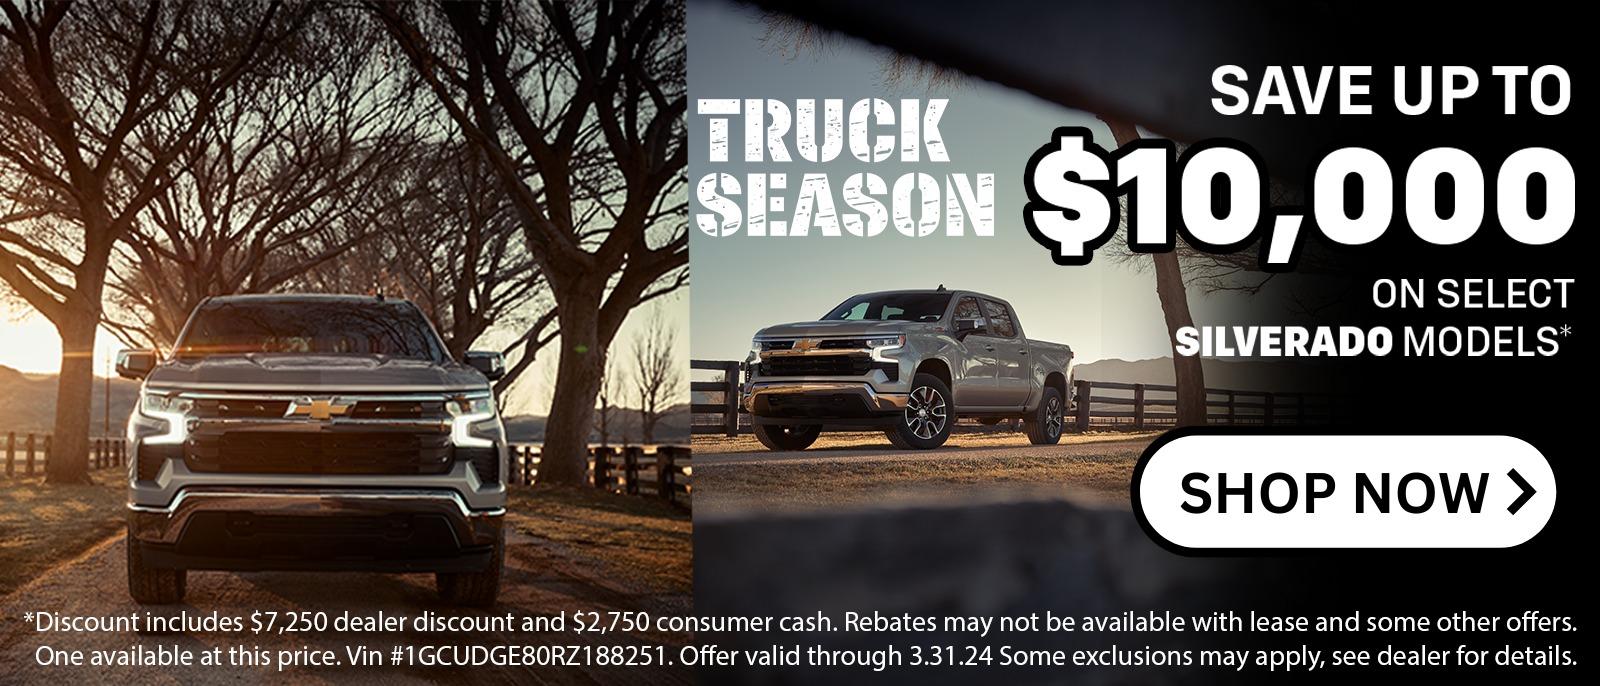 Truck Season 
Save Up to $10,000 on select Silverado Models